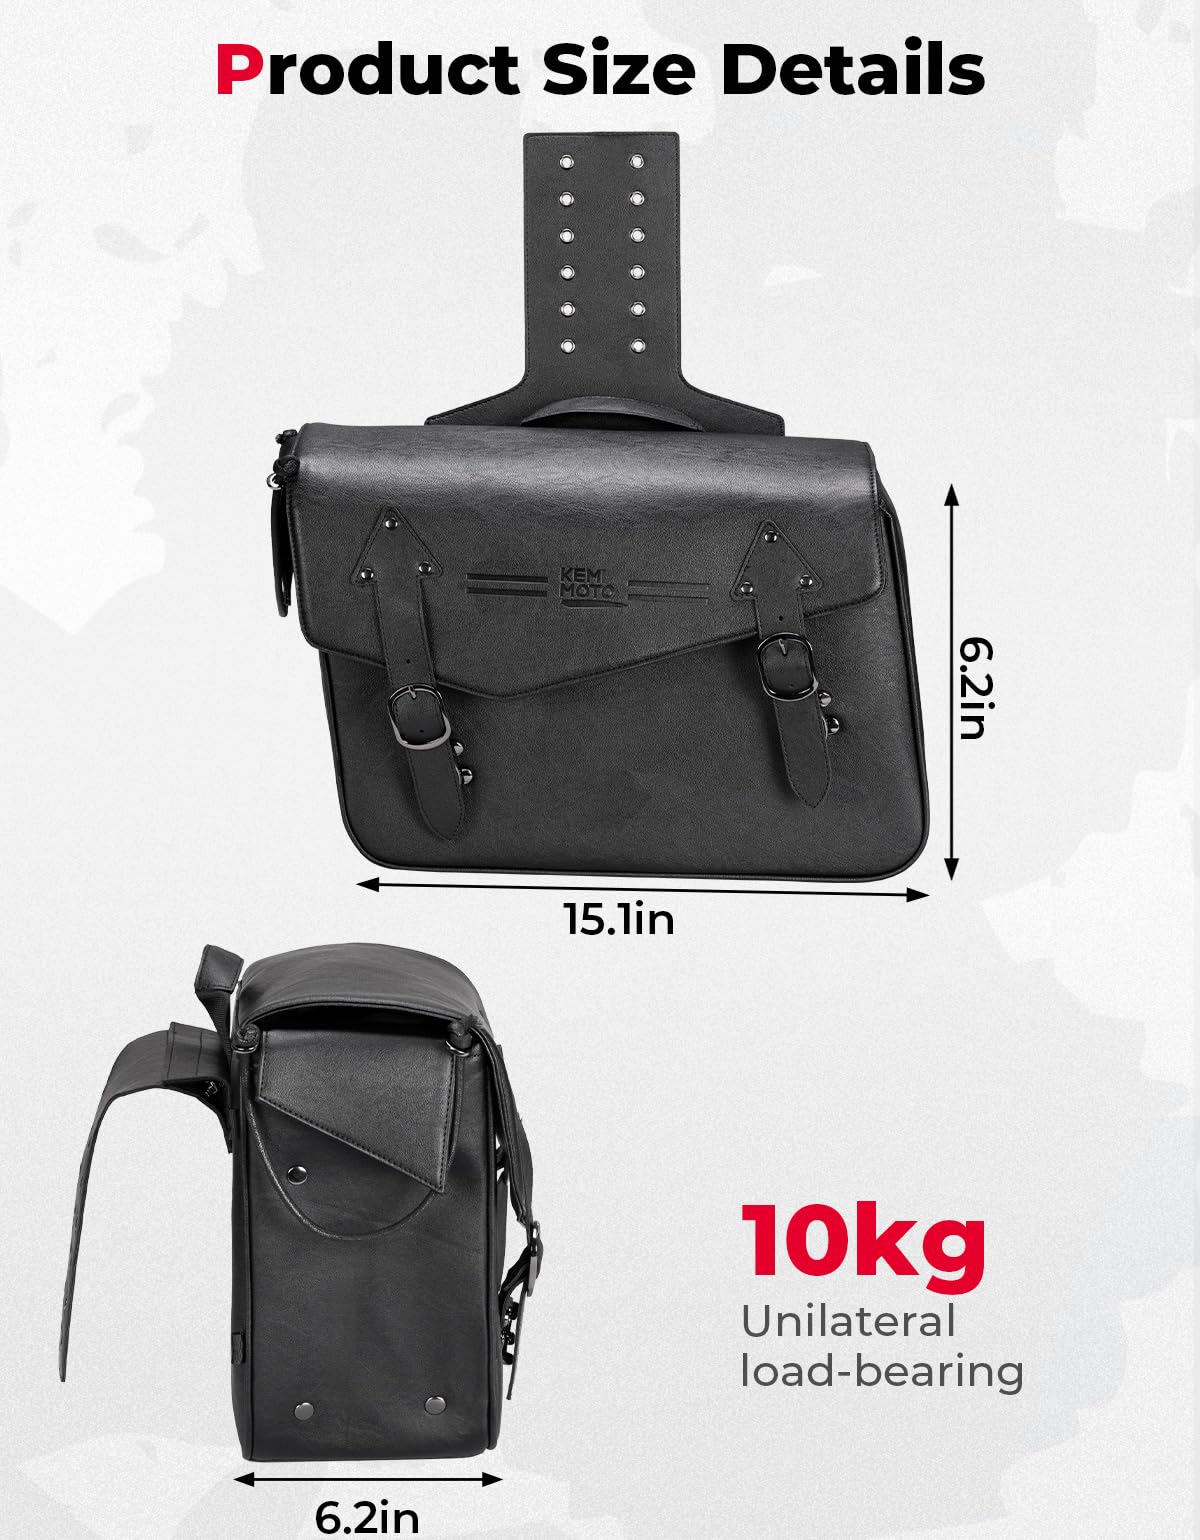 Handlebar T-Bar Bag for Cruiser Softail Dyna Sportsters - Kemimoto